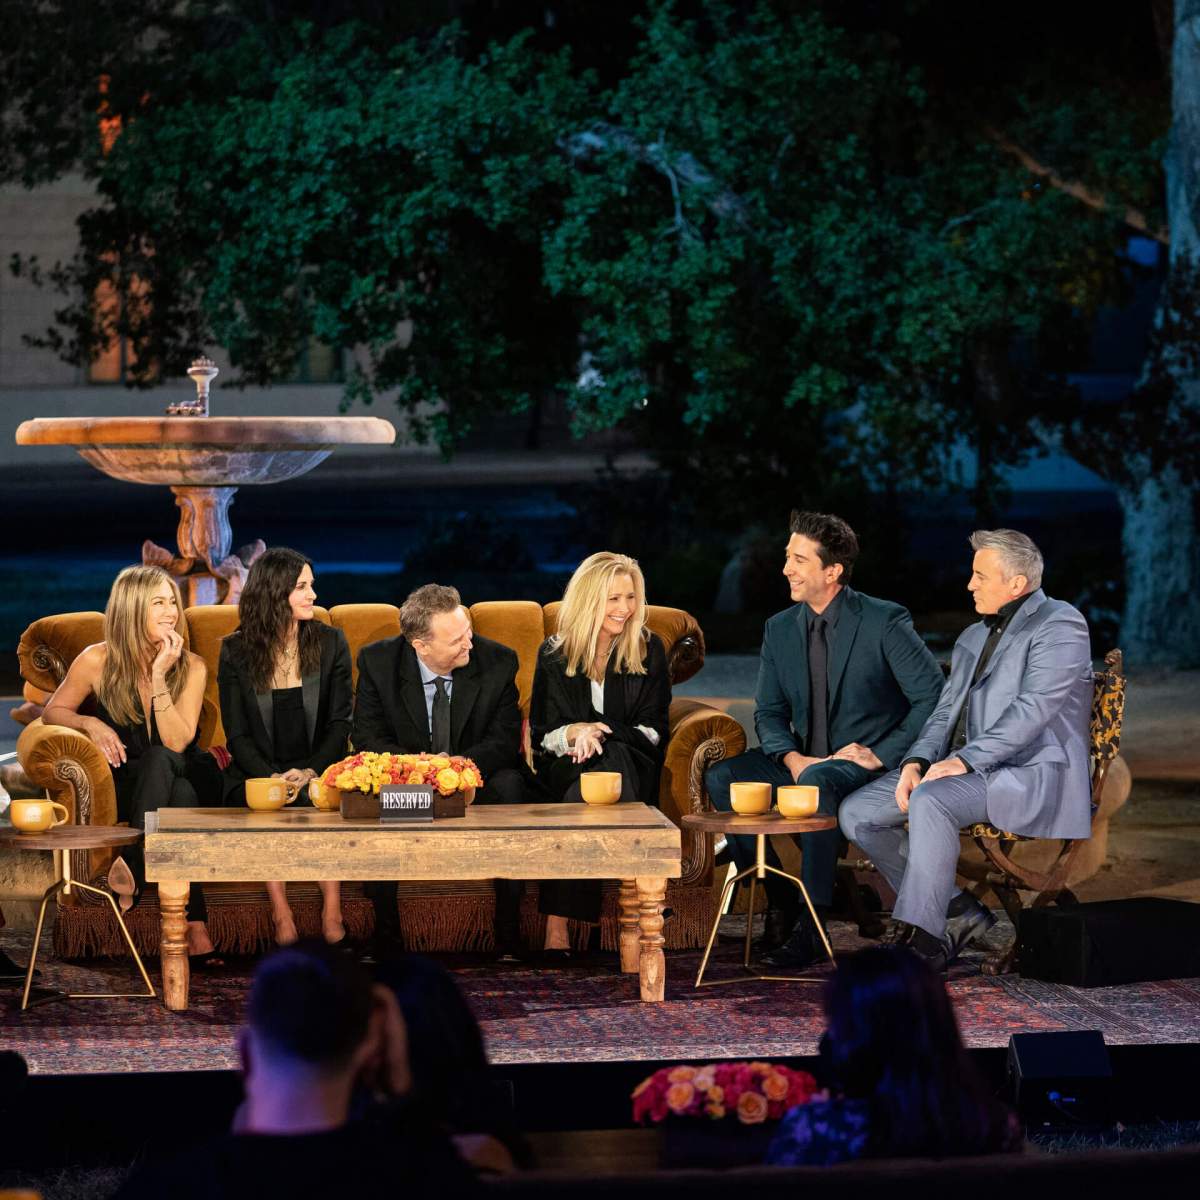 Jennifer Aniston, Courteney Cox, Matthew Perry, Lisa Kudrow, David Schwimmer and Matt LeBlanc are seen during the “Friends” reunion